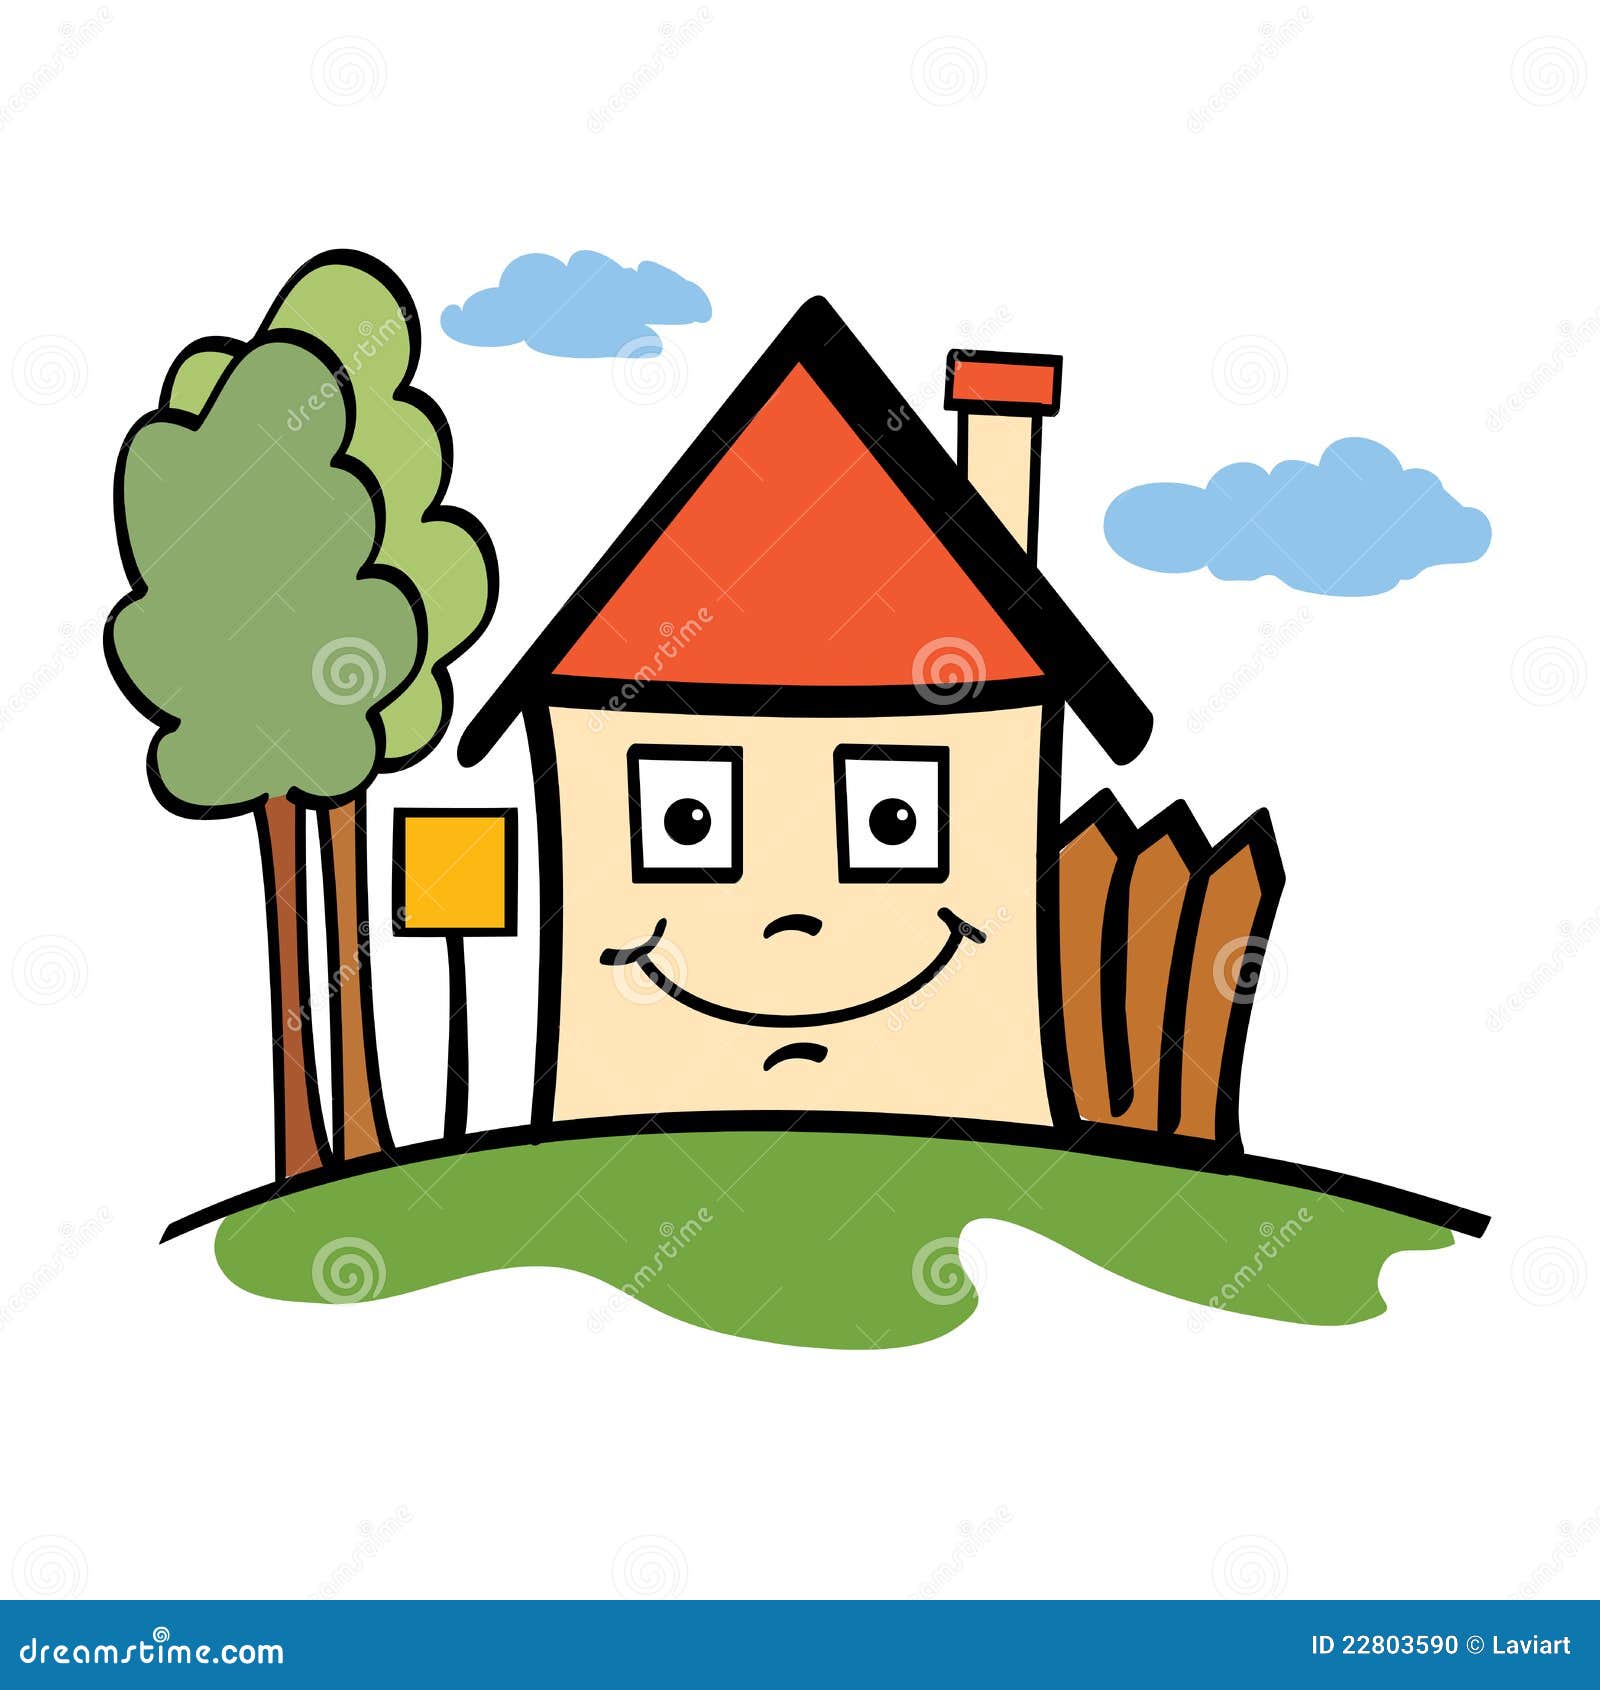 Happy house stock illustration. Illustration of cheerful - 22803590